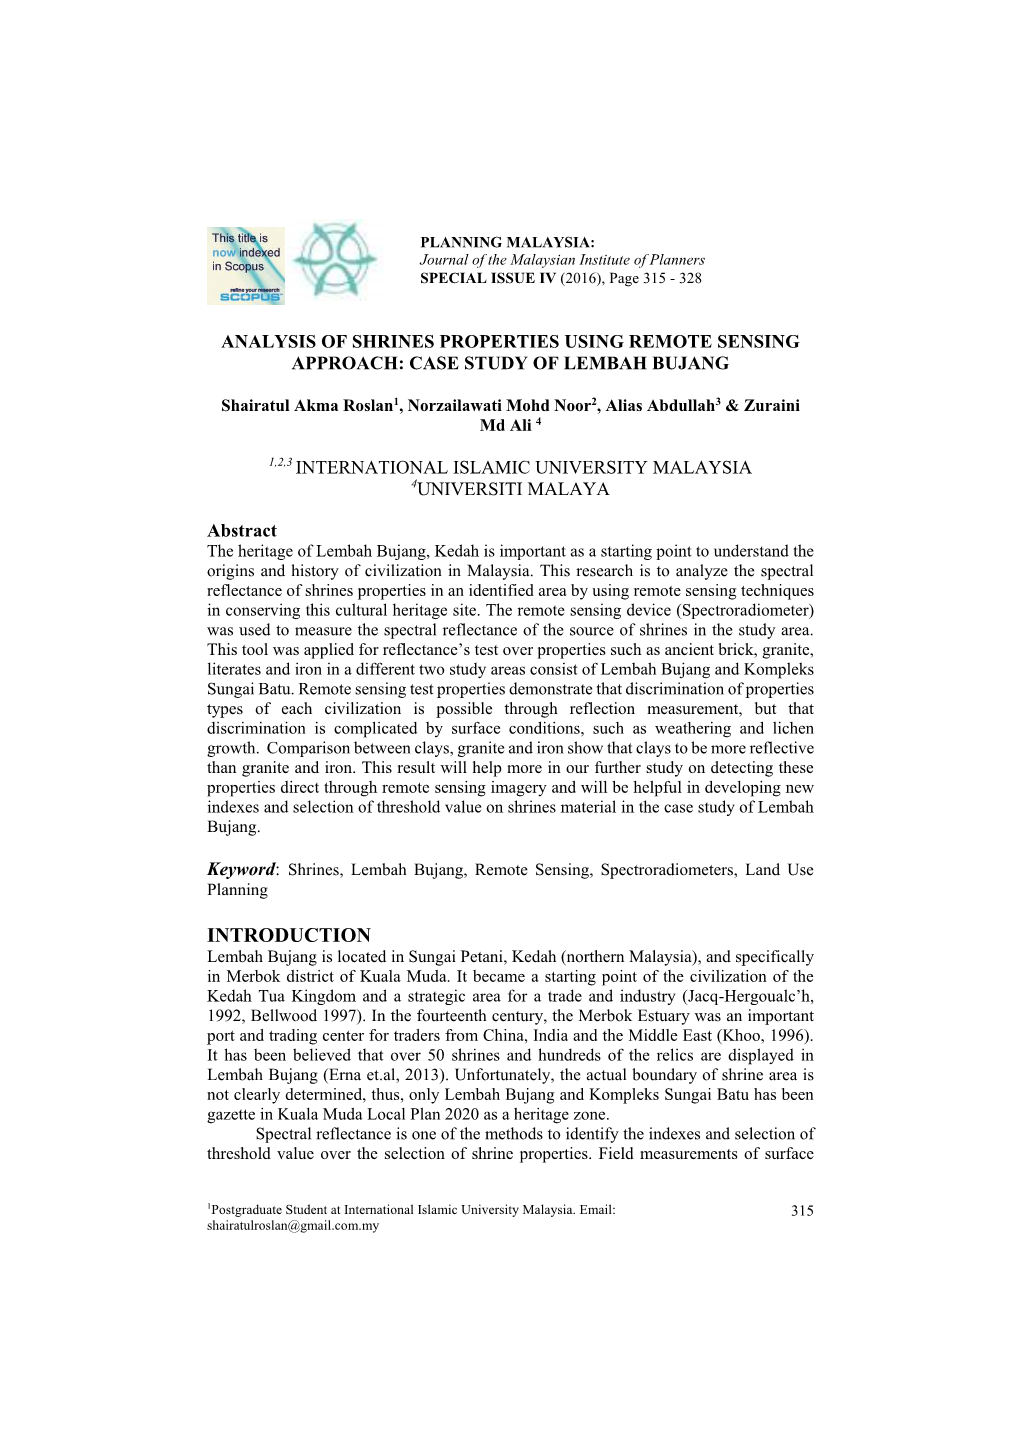 Analysis of Shrines Properties Using Remote Sensing Approach: Case Study of Lembah Bujang